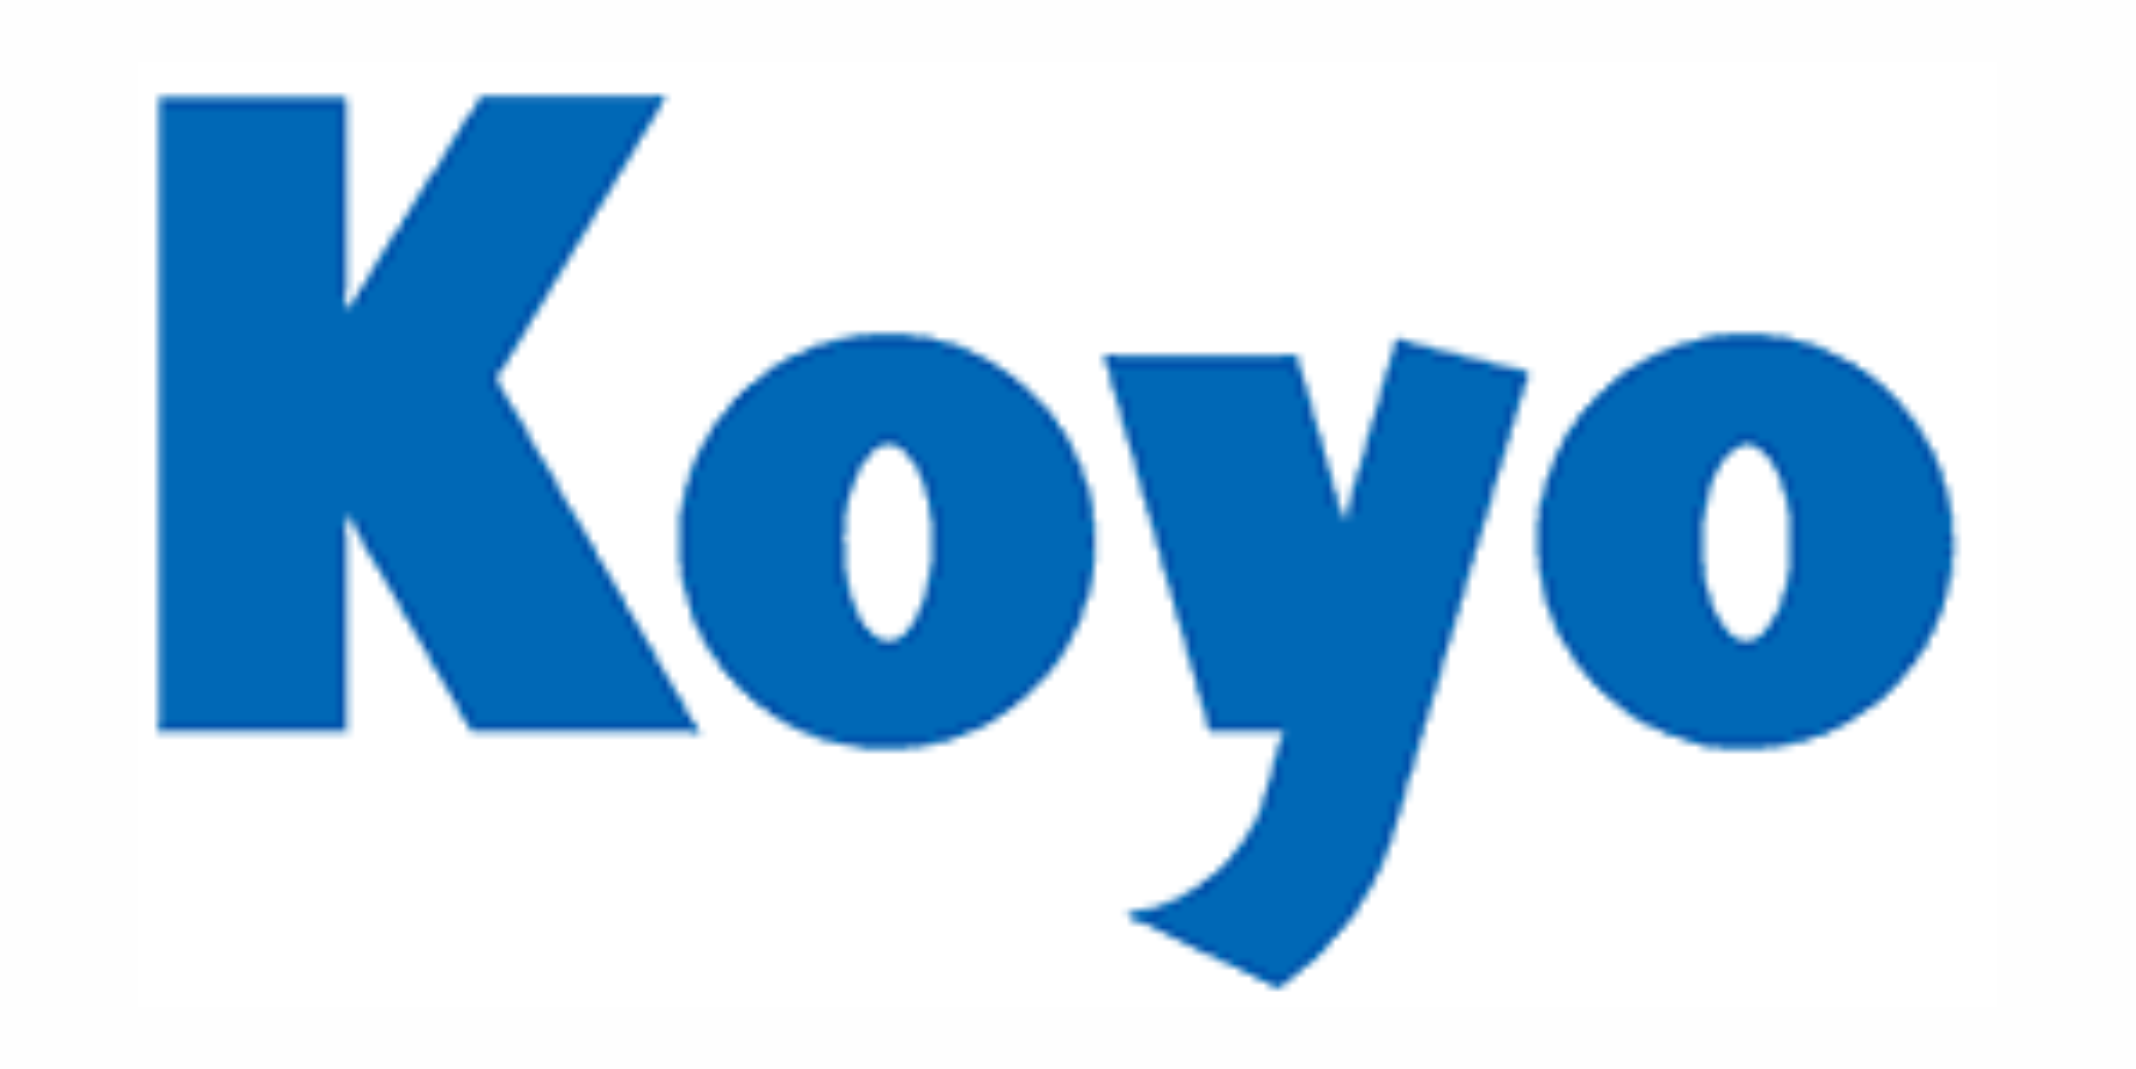 Koyo logo 2